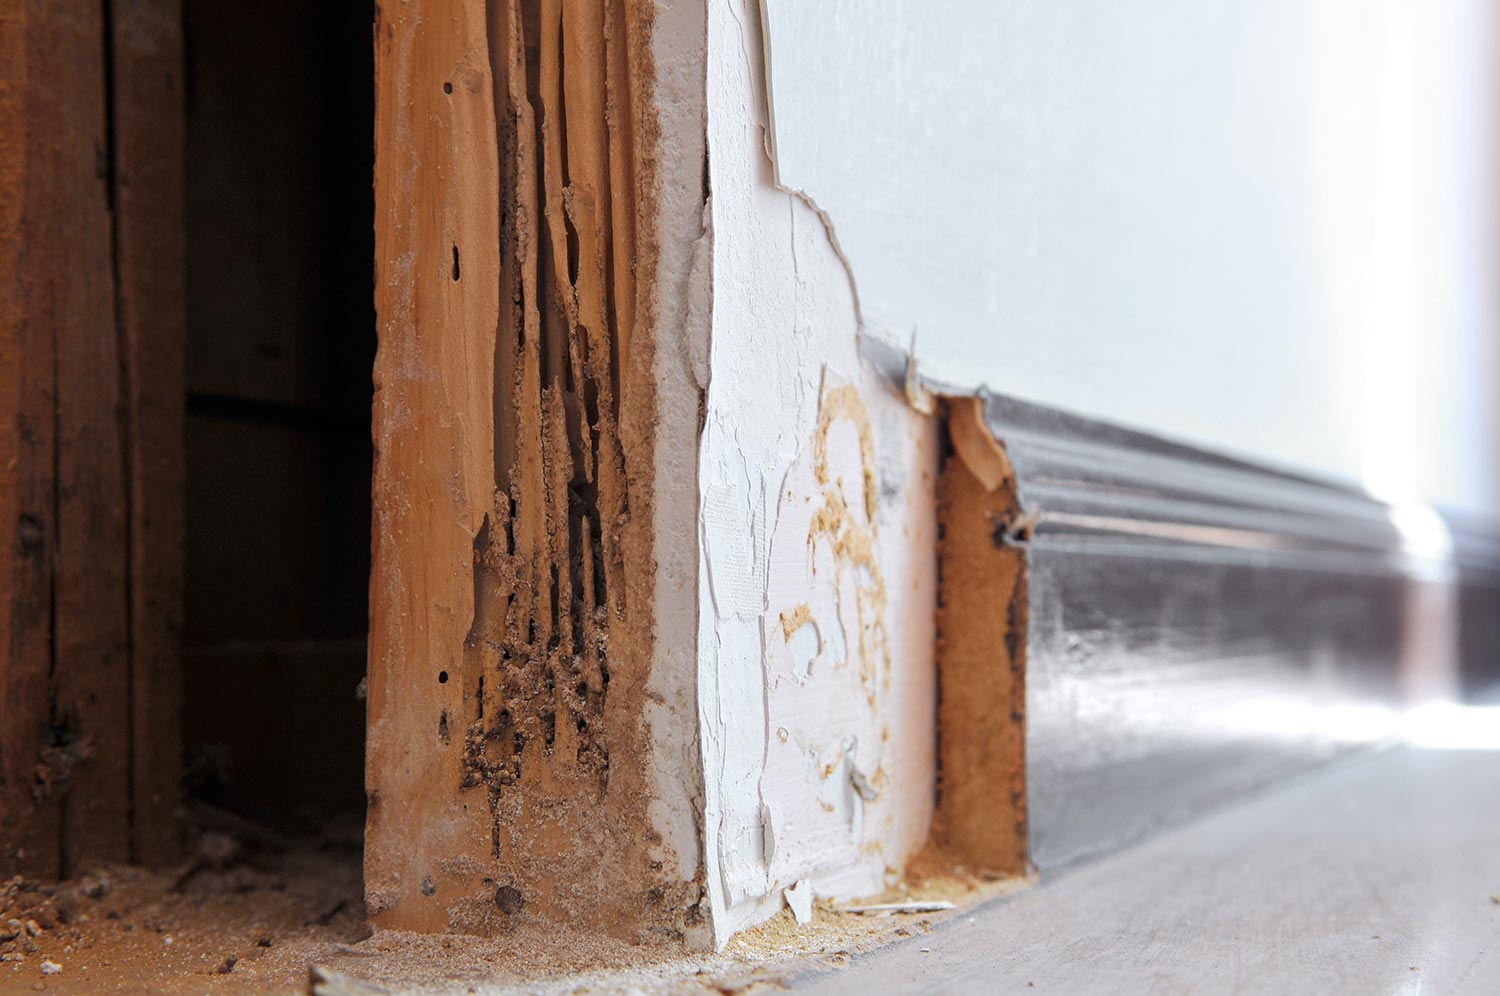 Rotten lumber inside wooden wall has been eaten by termites